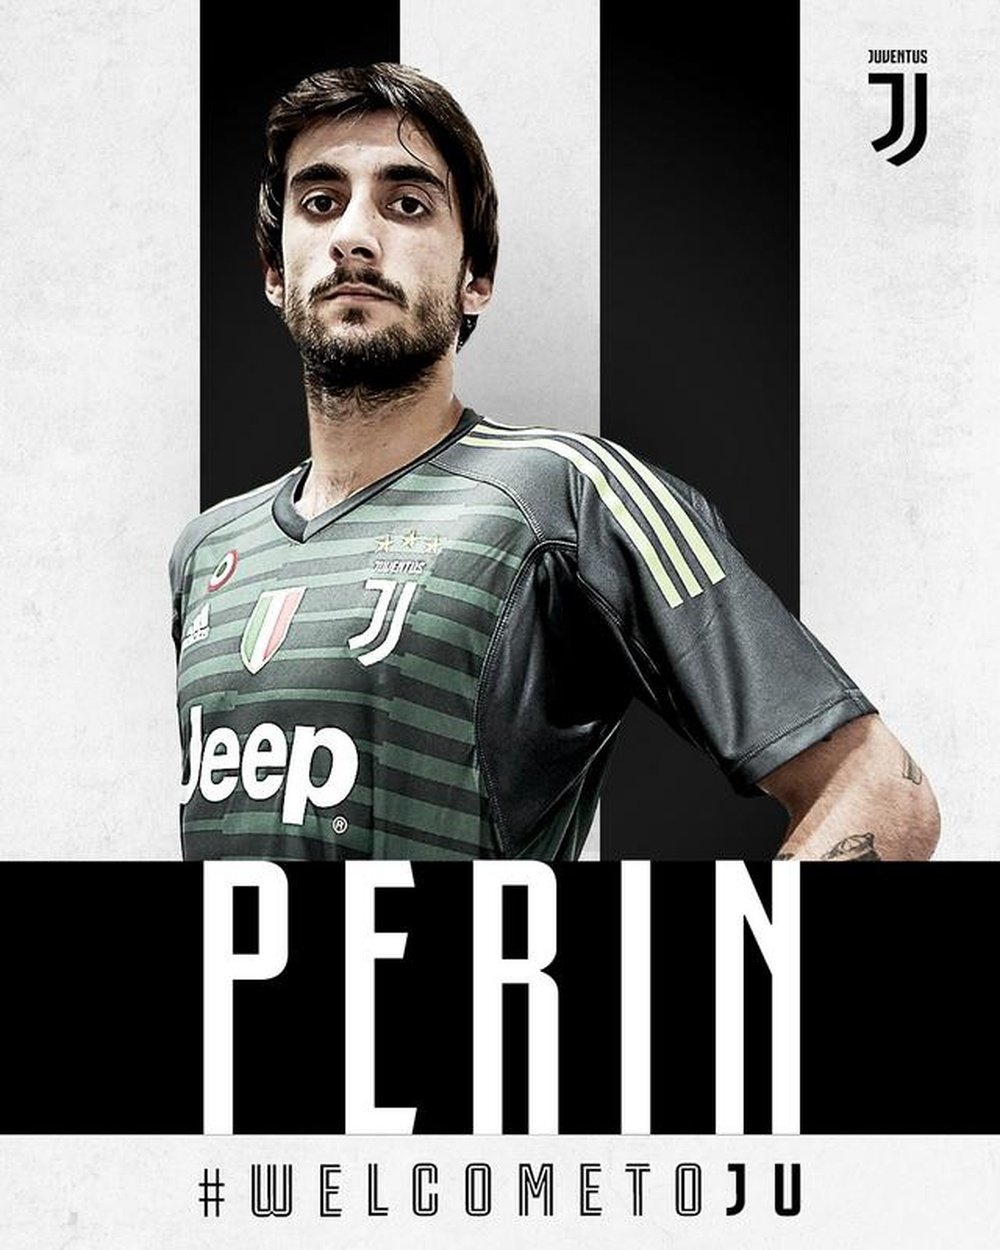 Perin é oficializado na Juventus. Twitter/Juventus